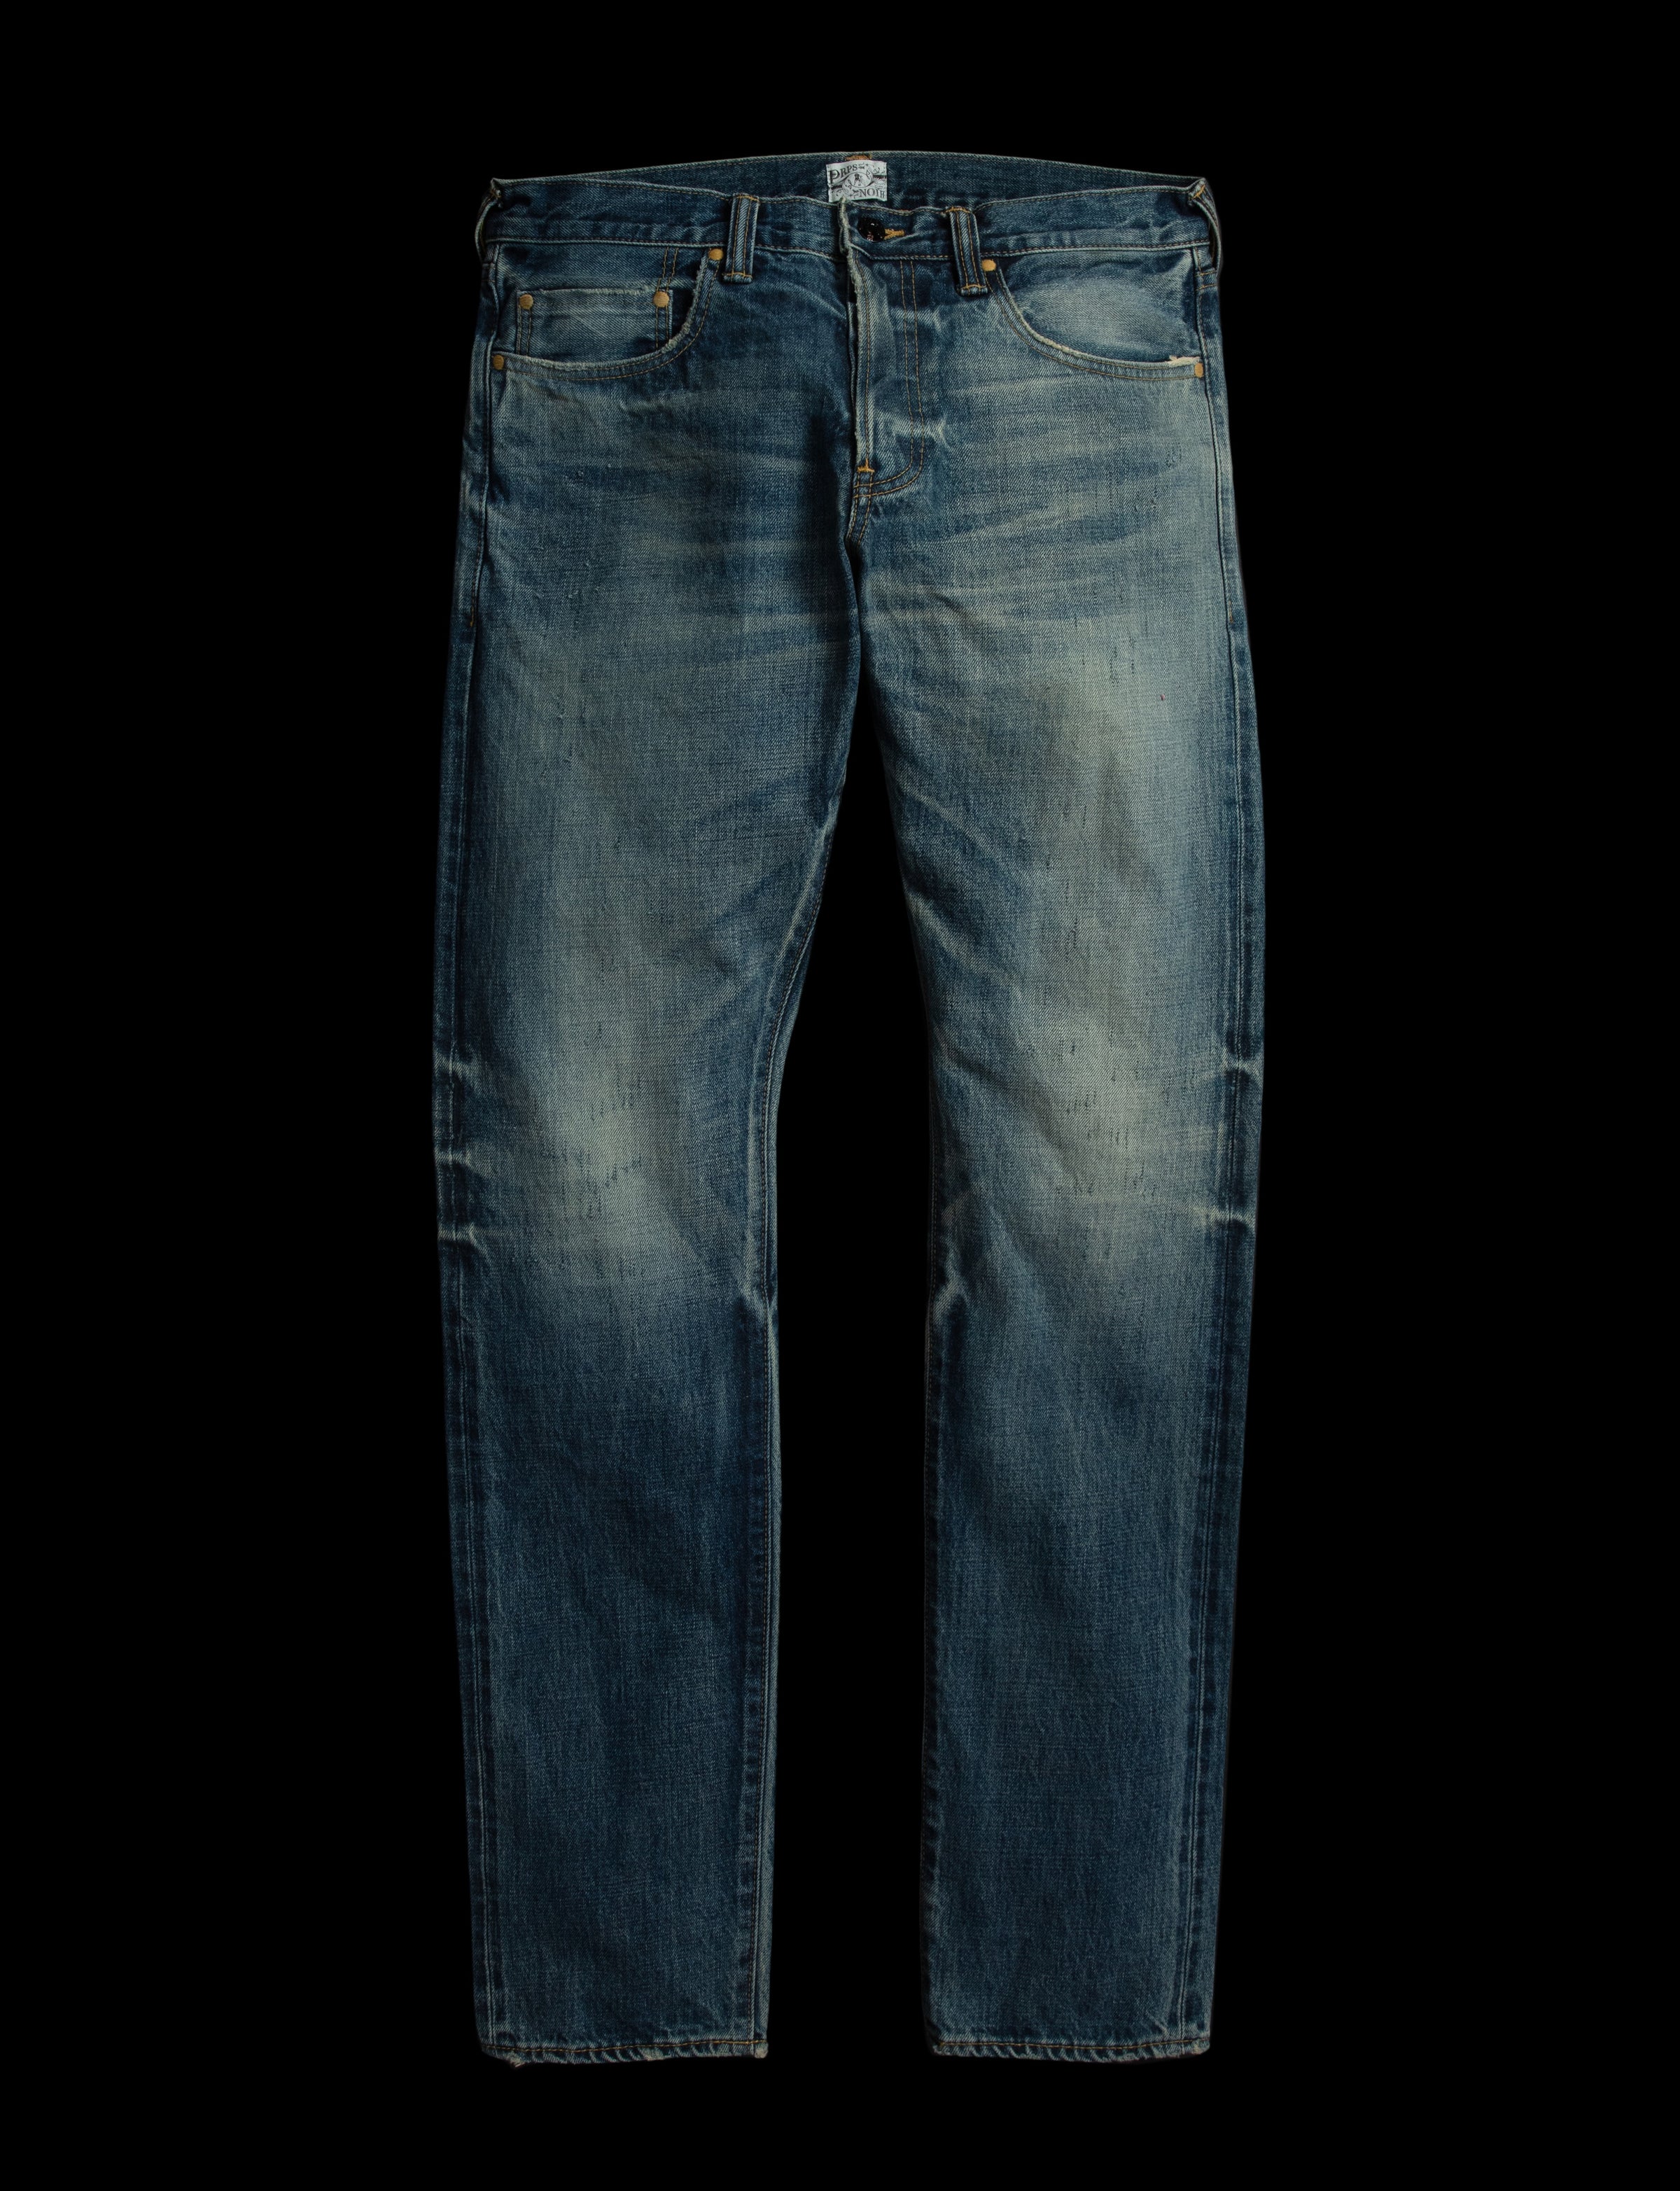 william rast perfect skinny jeans